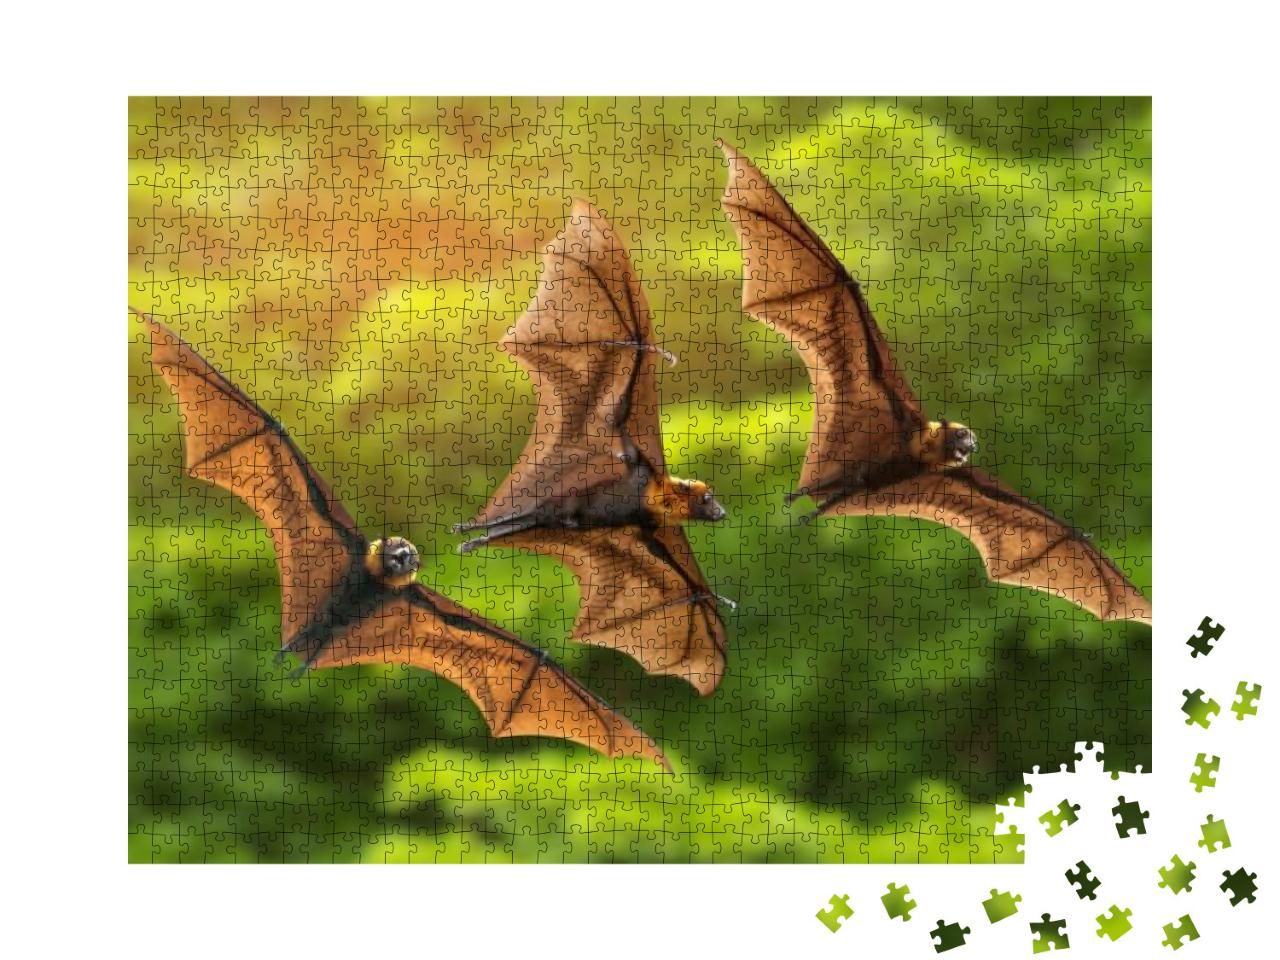 Puzzle 1000 Teile „Drei fliegende Fledermäuse“